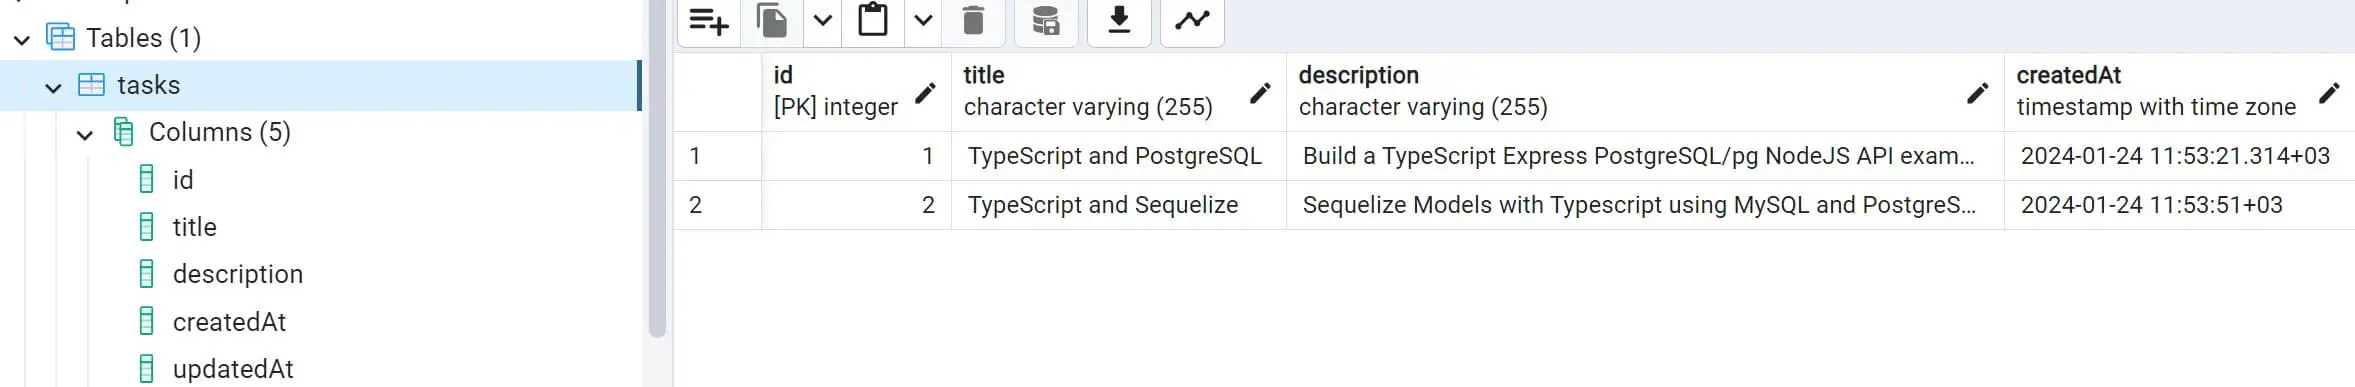 Sequelize Models with Typescript using MySQL and PostgreSQL